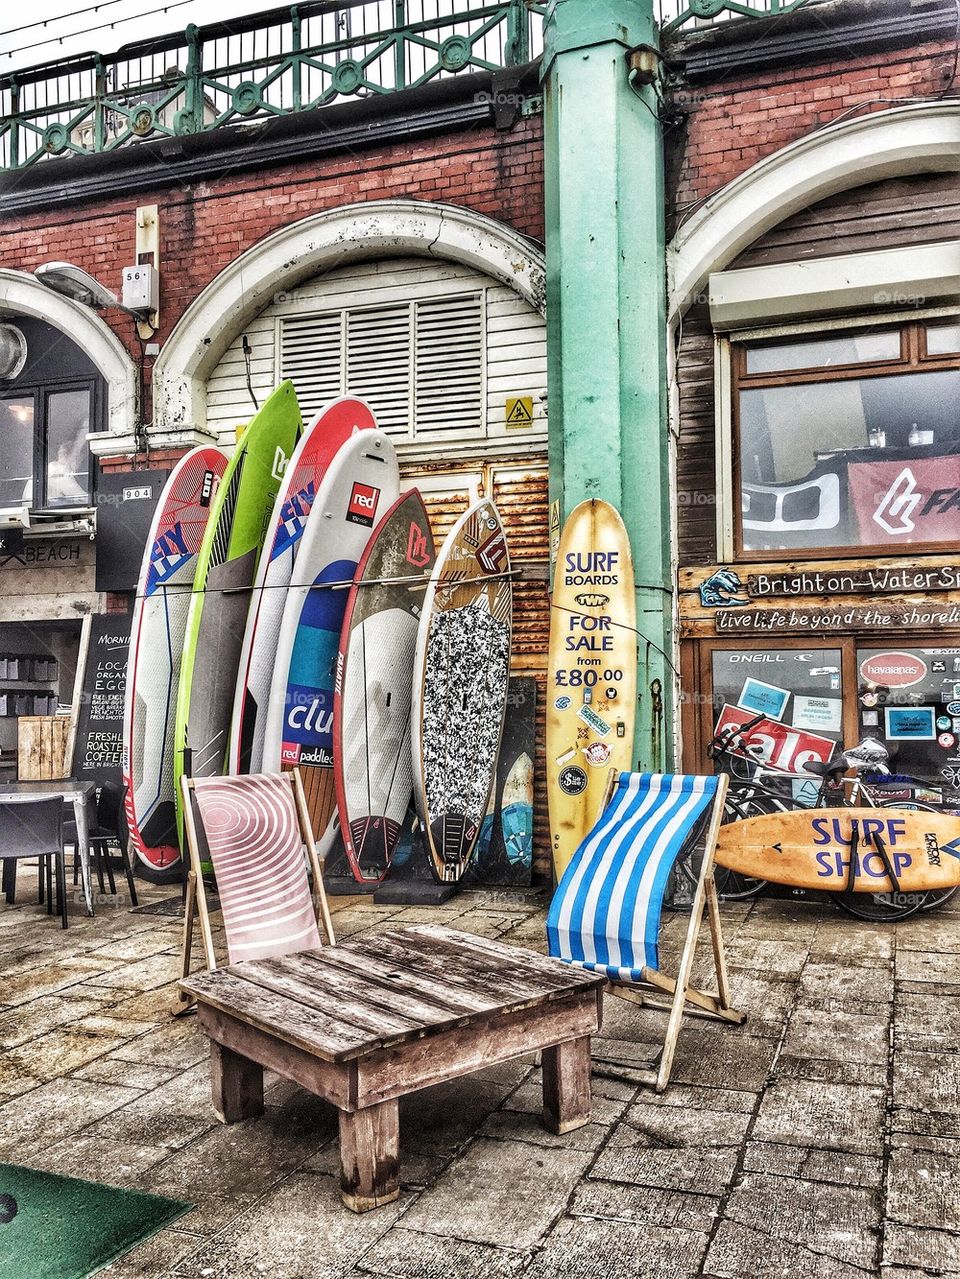 Surf shack in brighton